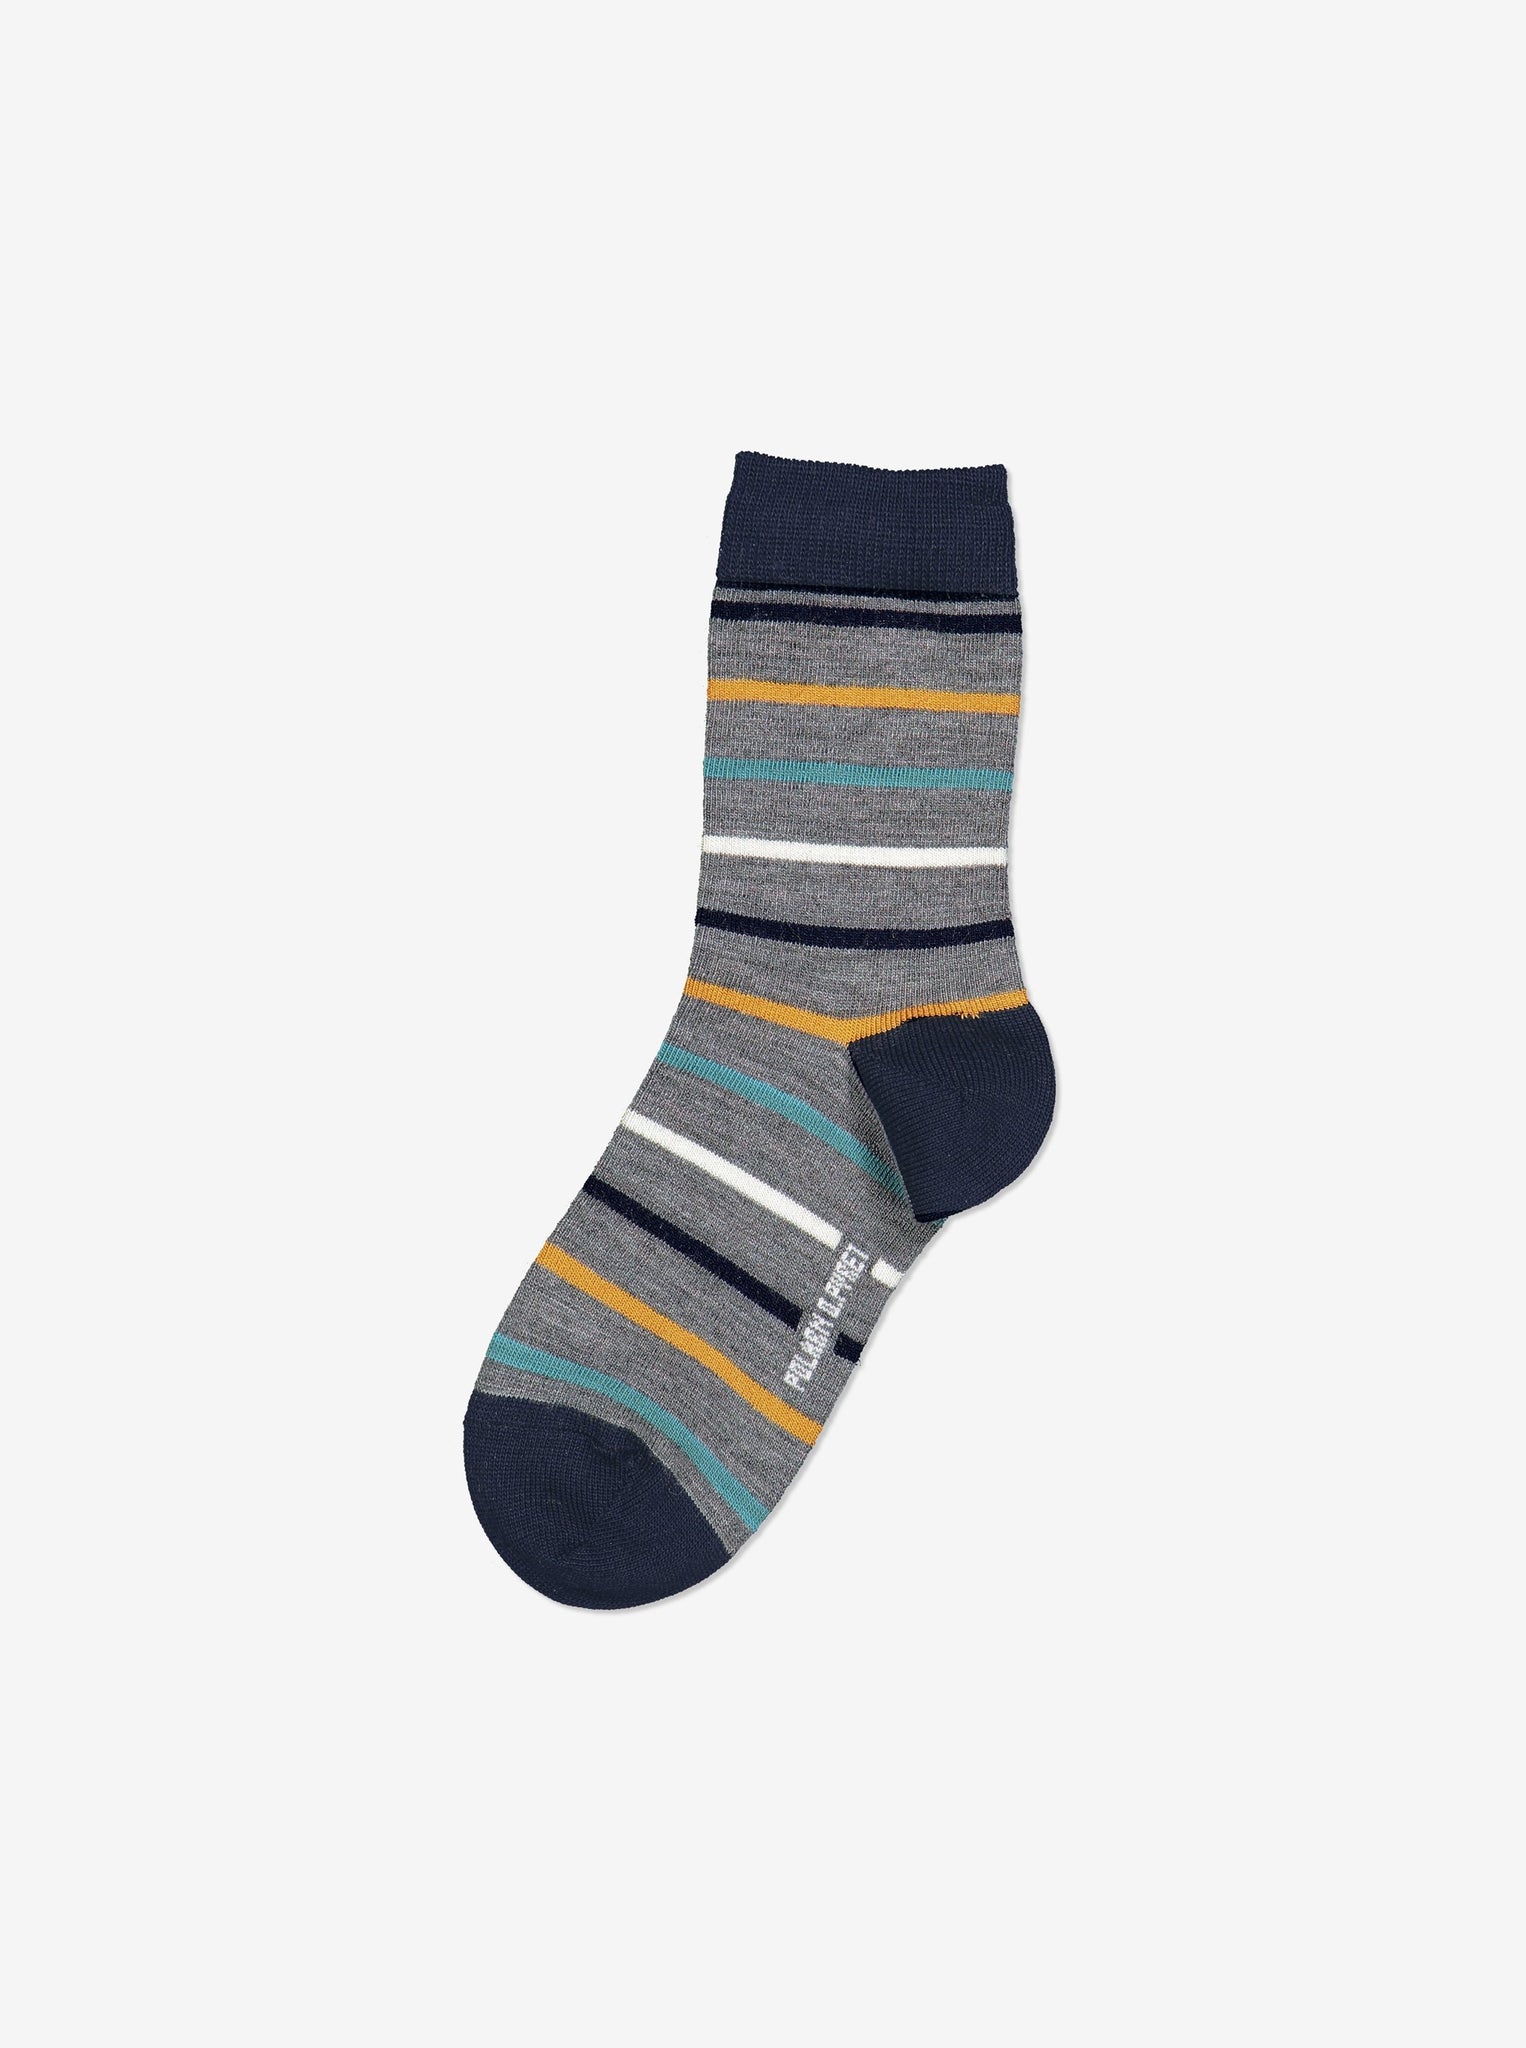 Striped Merino Kids Socks-Unisex-4m-12y-Grey